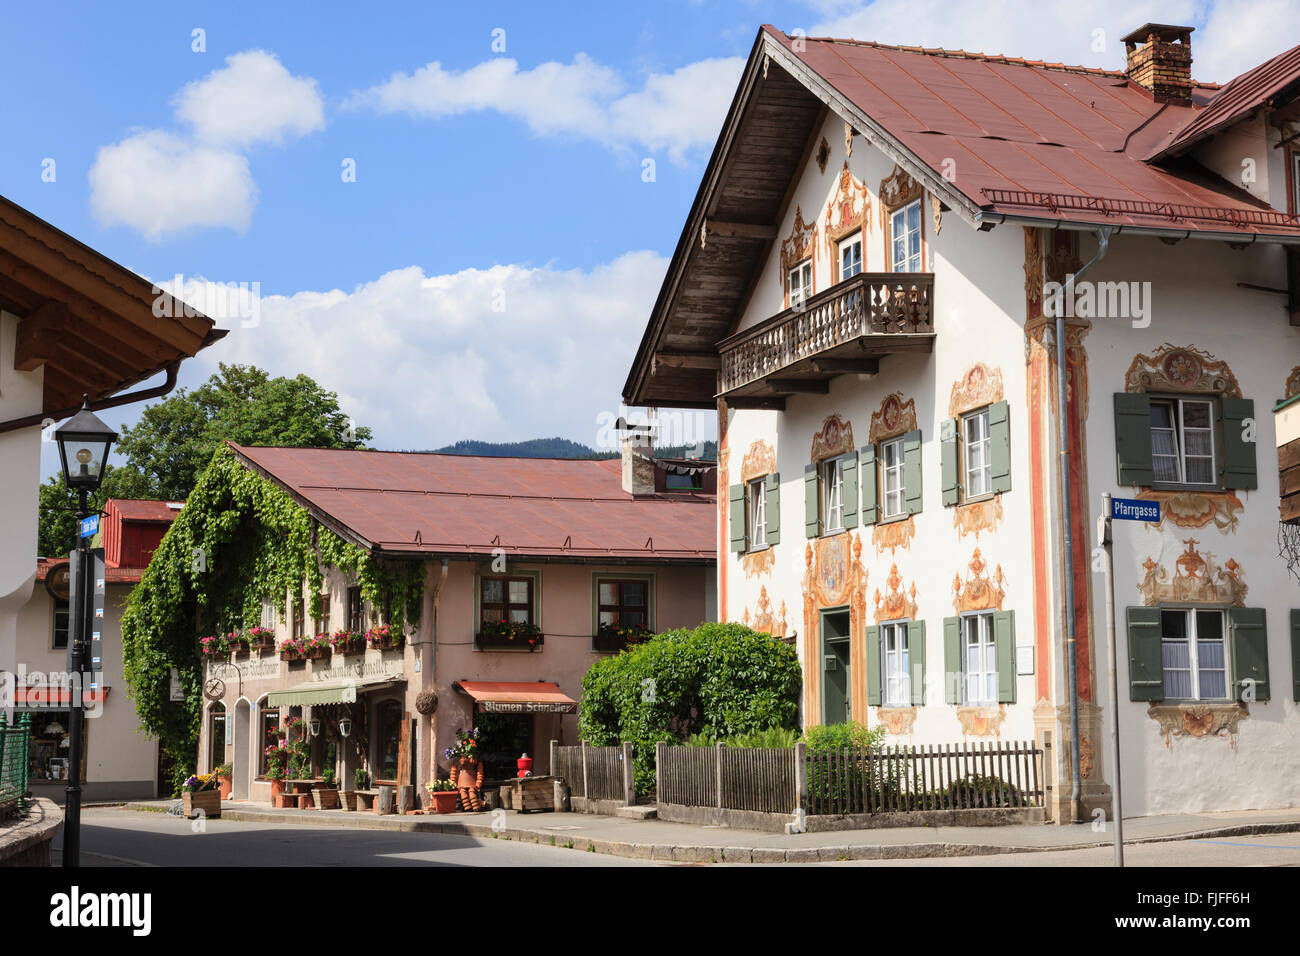 Tipici tradizionali edifici alpini nella città bavarese di Oberammergau, Baviera, Germania, Europa. Foto Stock